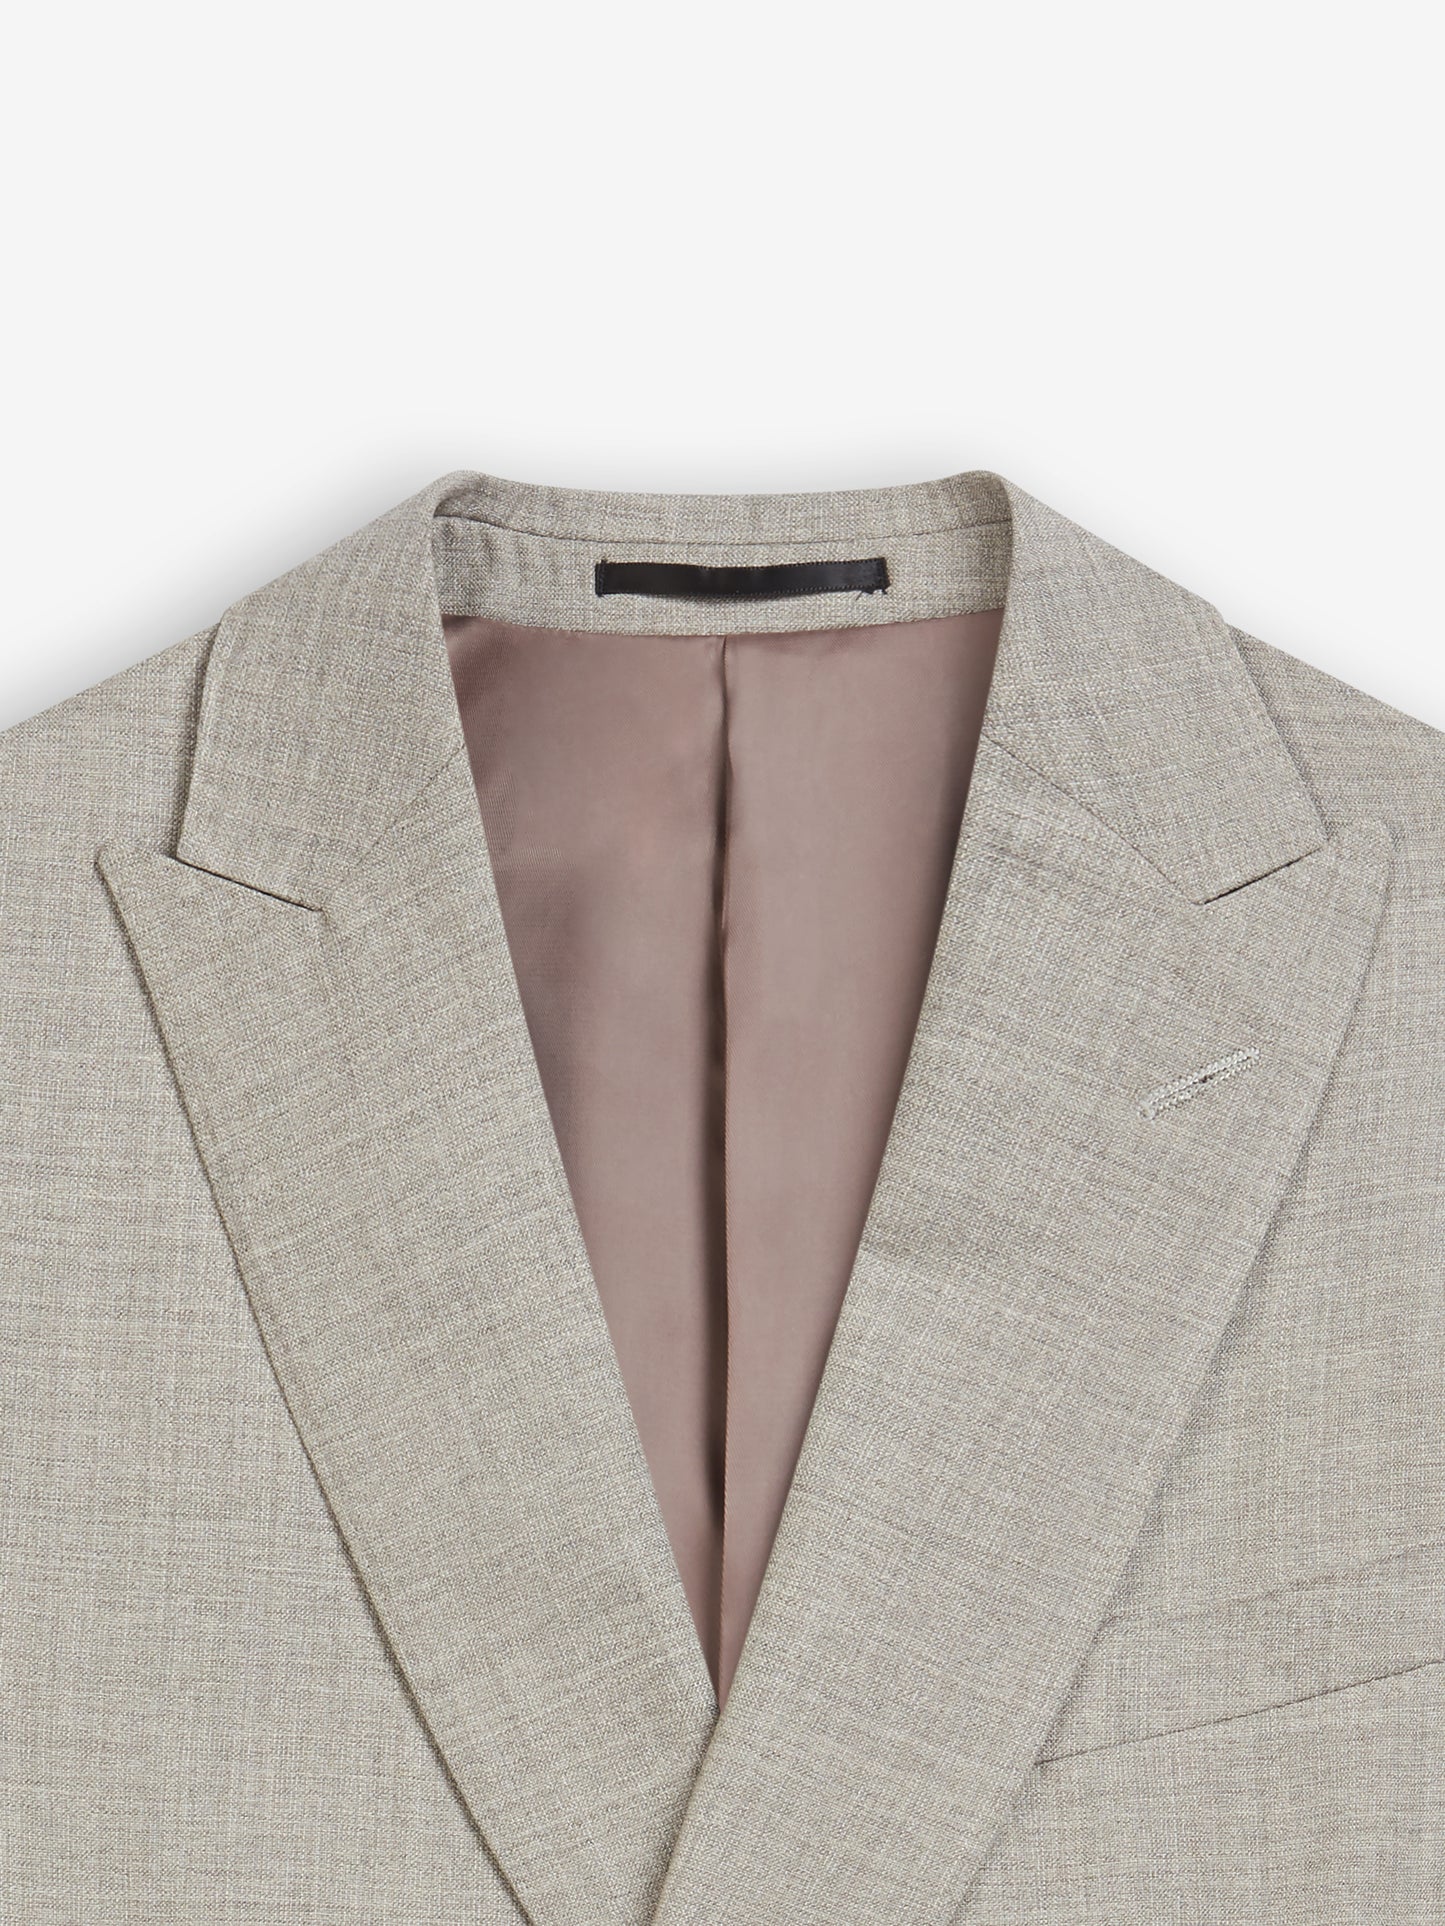 Venaria Italian Luxury Slim Double Breasted Beige Suit Jacket